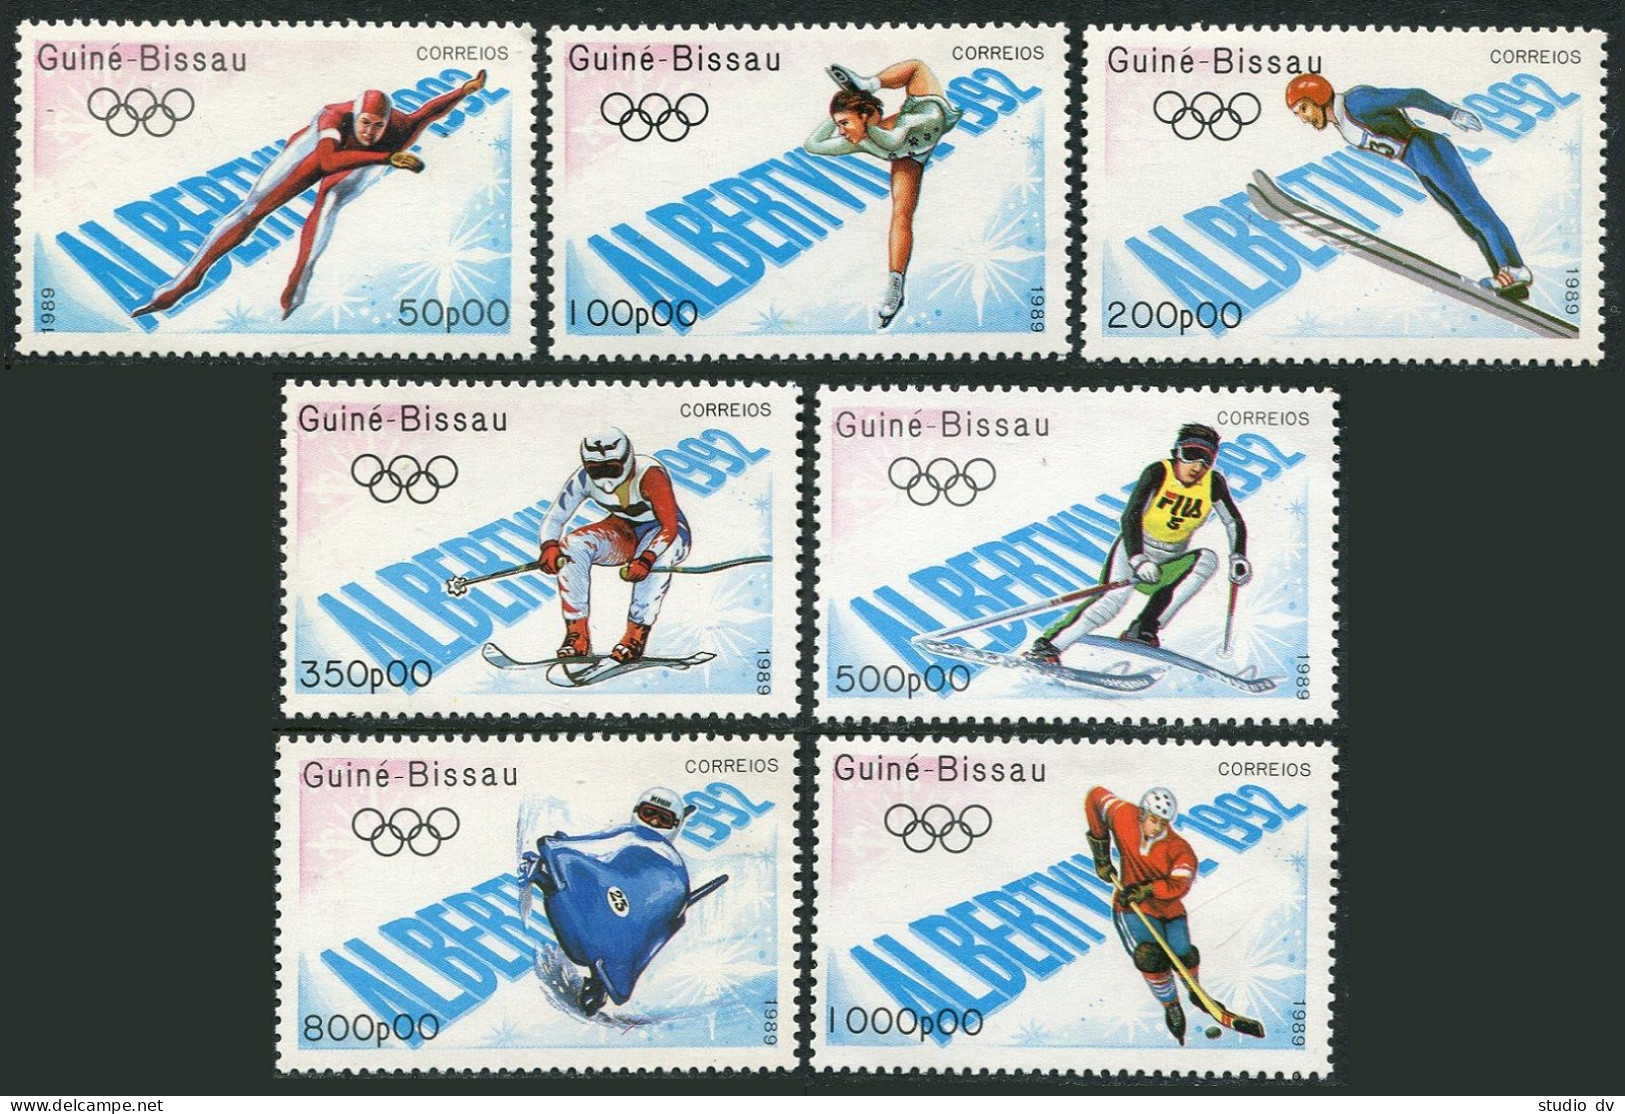 Guinea Bissau 772-778, MNH. Olympics, Albertville-1992: Hockey, Speed Skating, - Guinea-Bissau